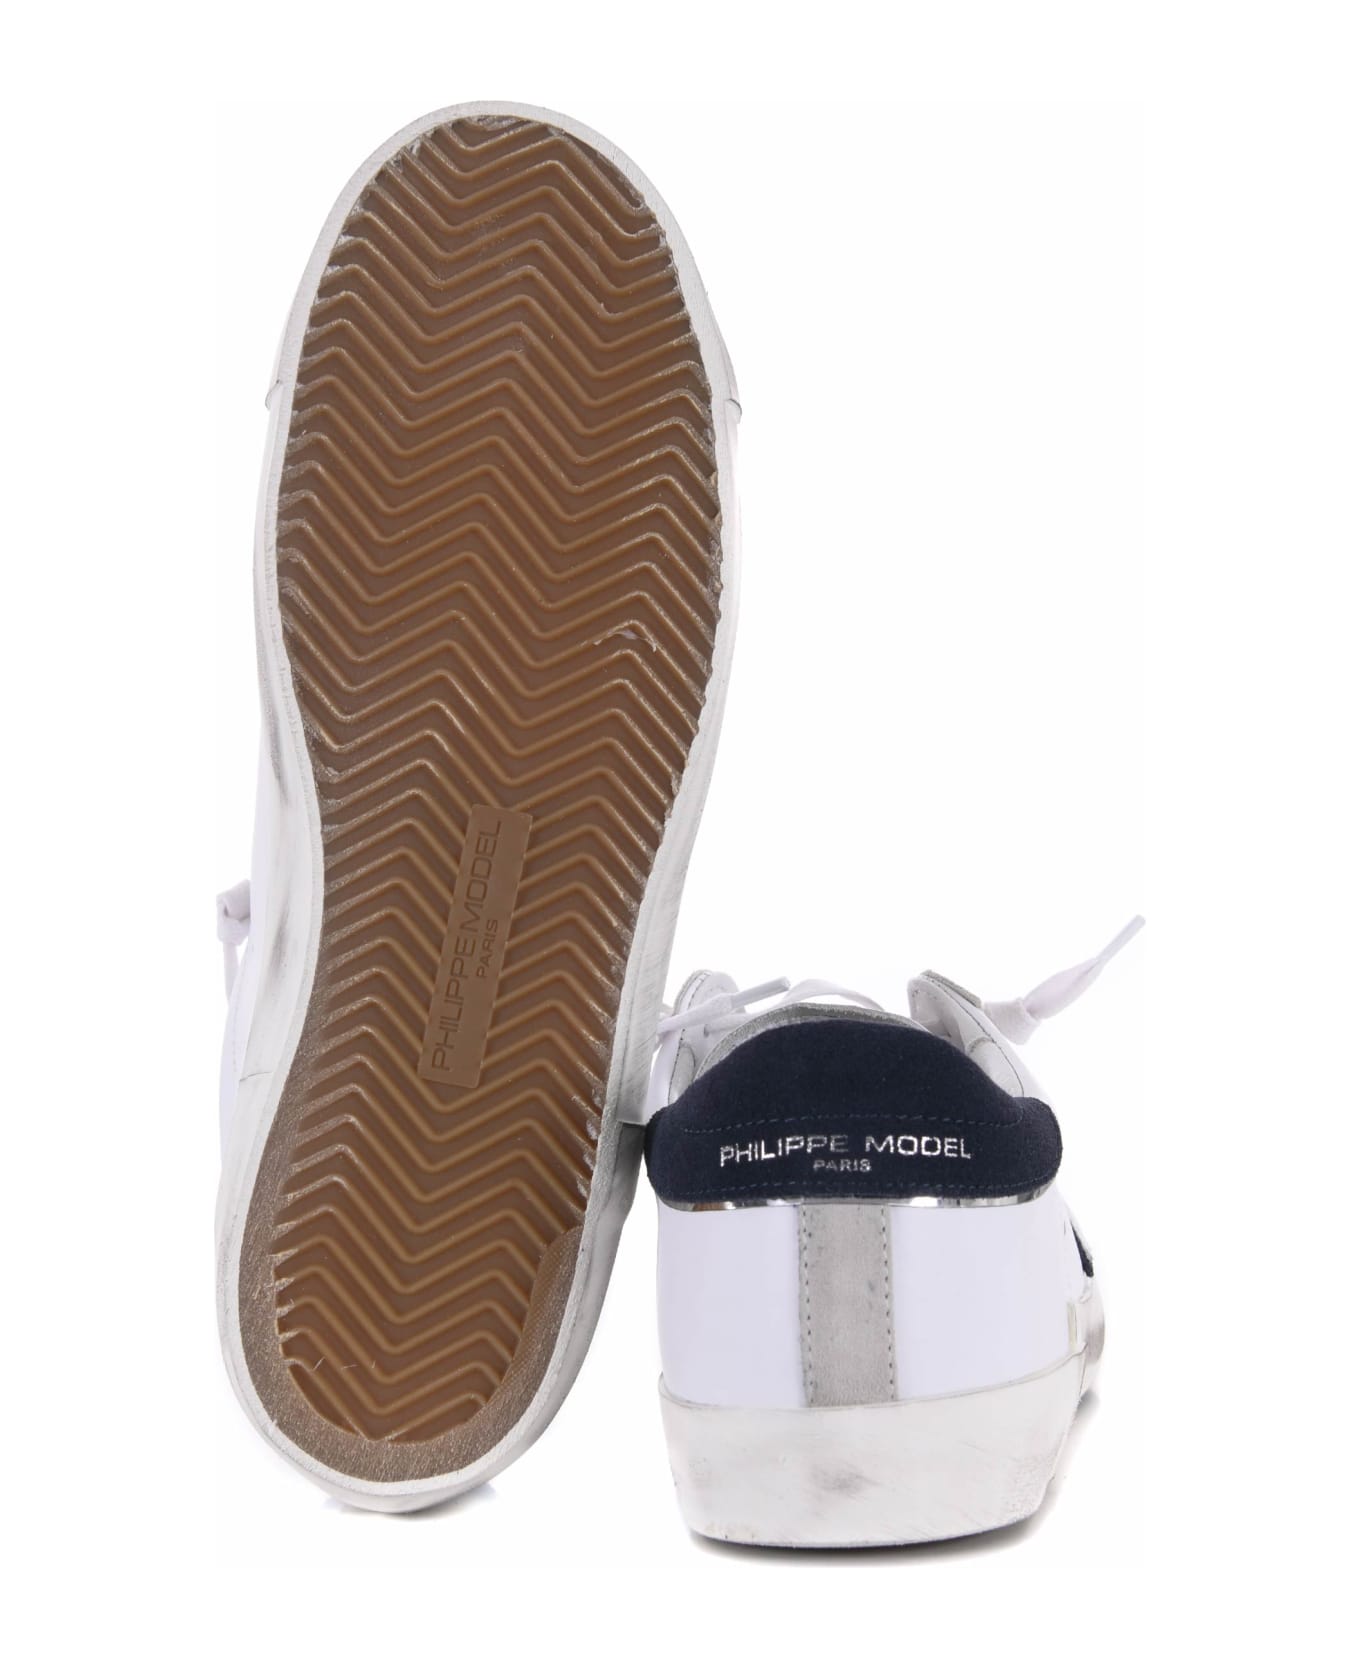 Philippe Model Sneakers Philippe Model "prsx Low" In Pelle Disponibile Store Scafati - Bianco/blu スニーカー